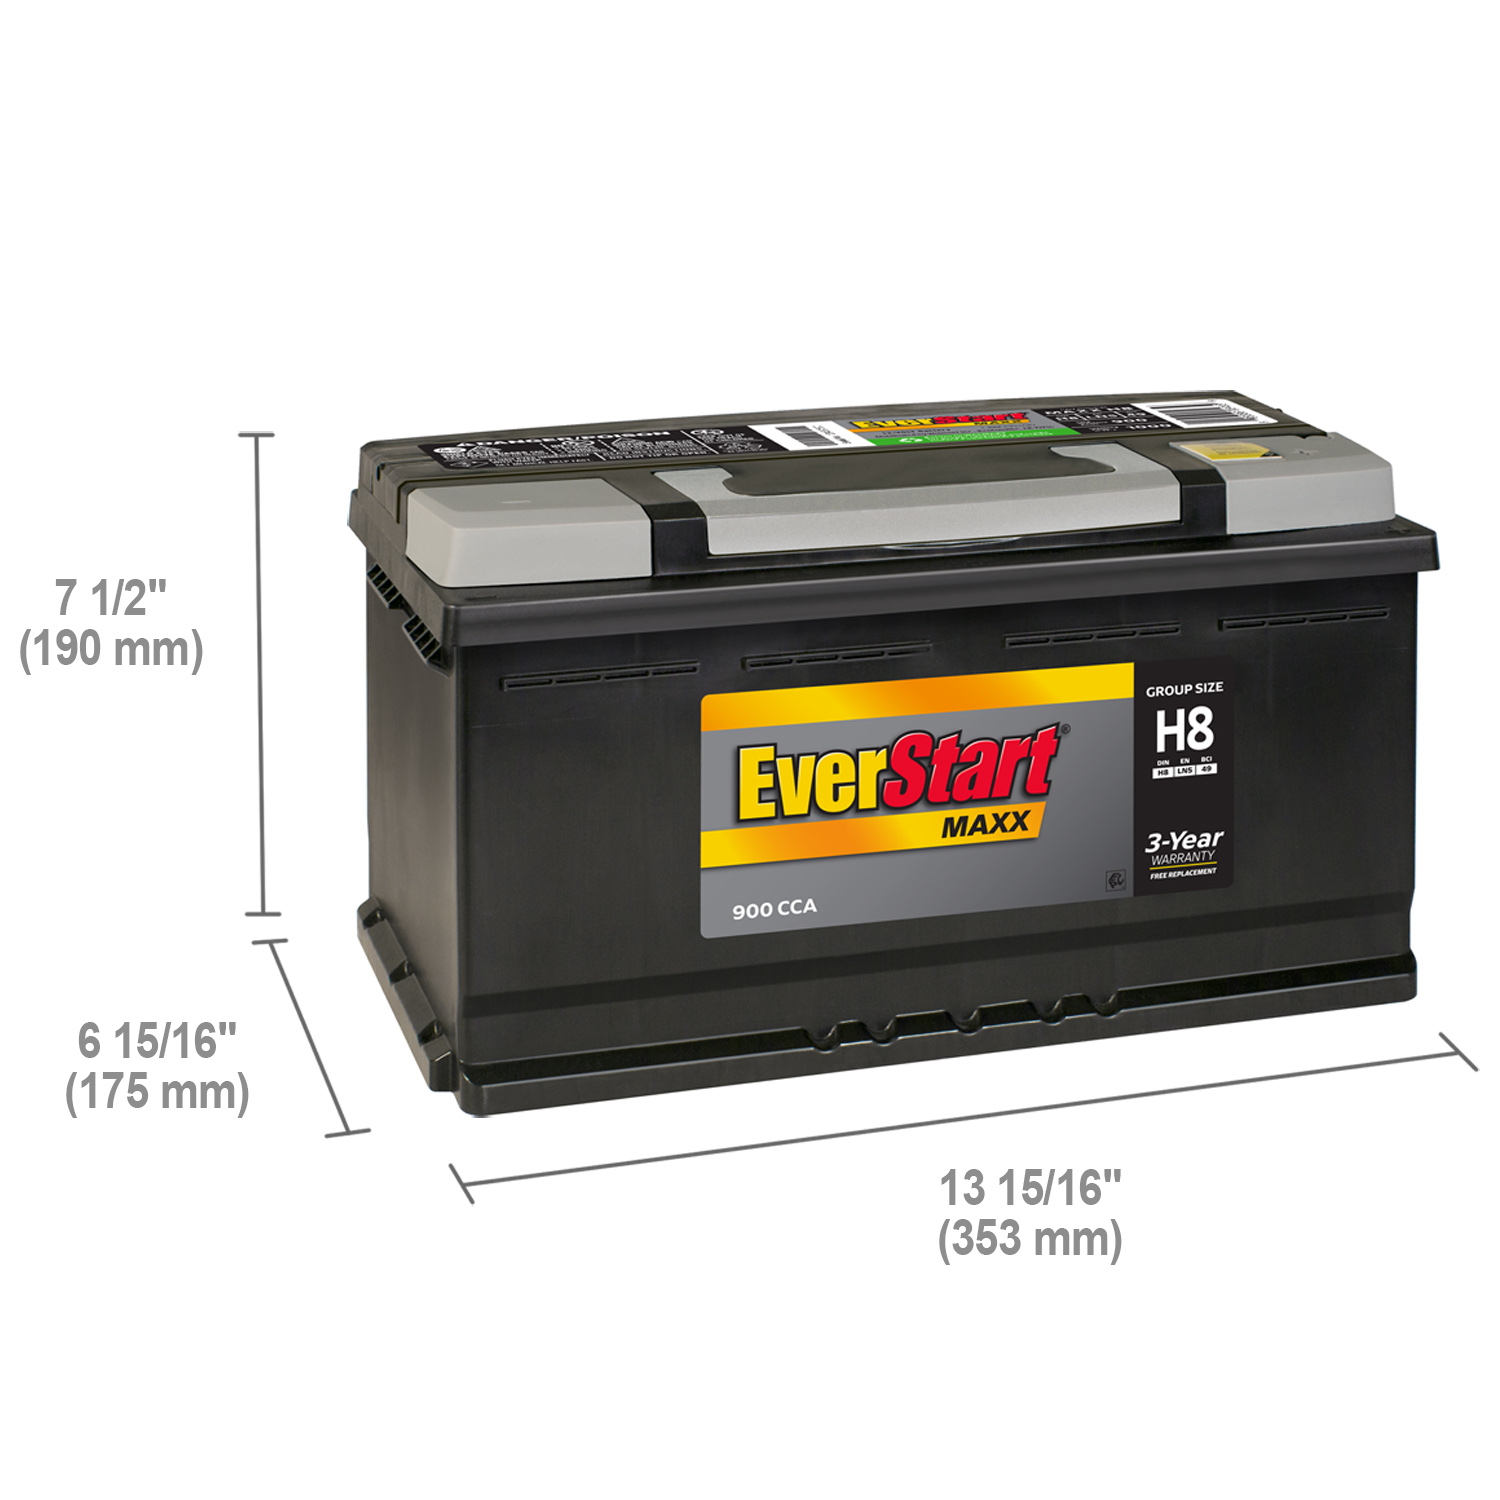 EverStart Maxx Lead Acid Automotive Battery, Group Size H8 / LN5 / 49 12 Volt, 900 CCA - image 2 of 7